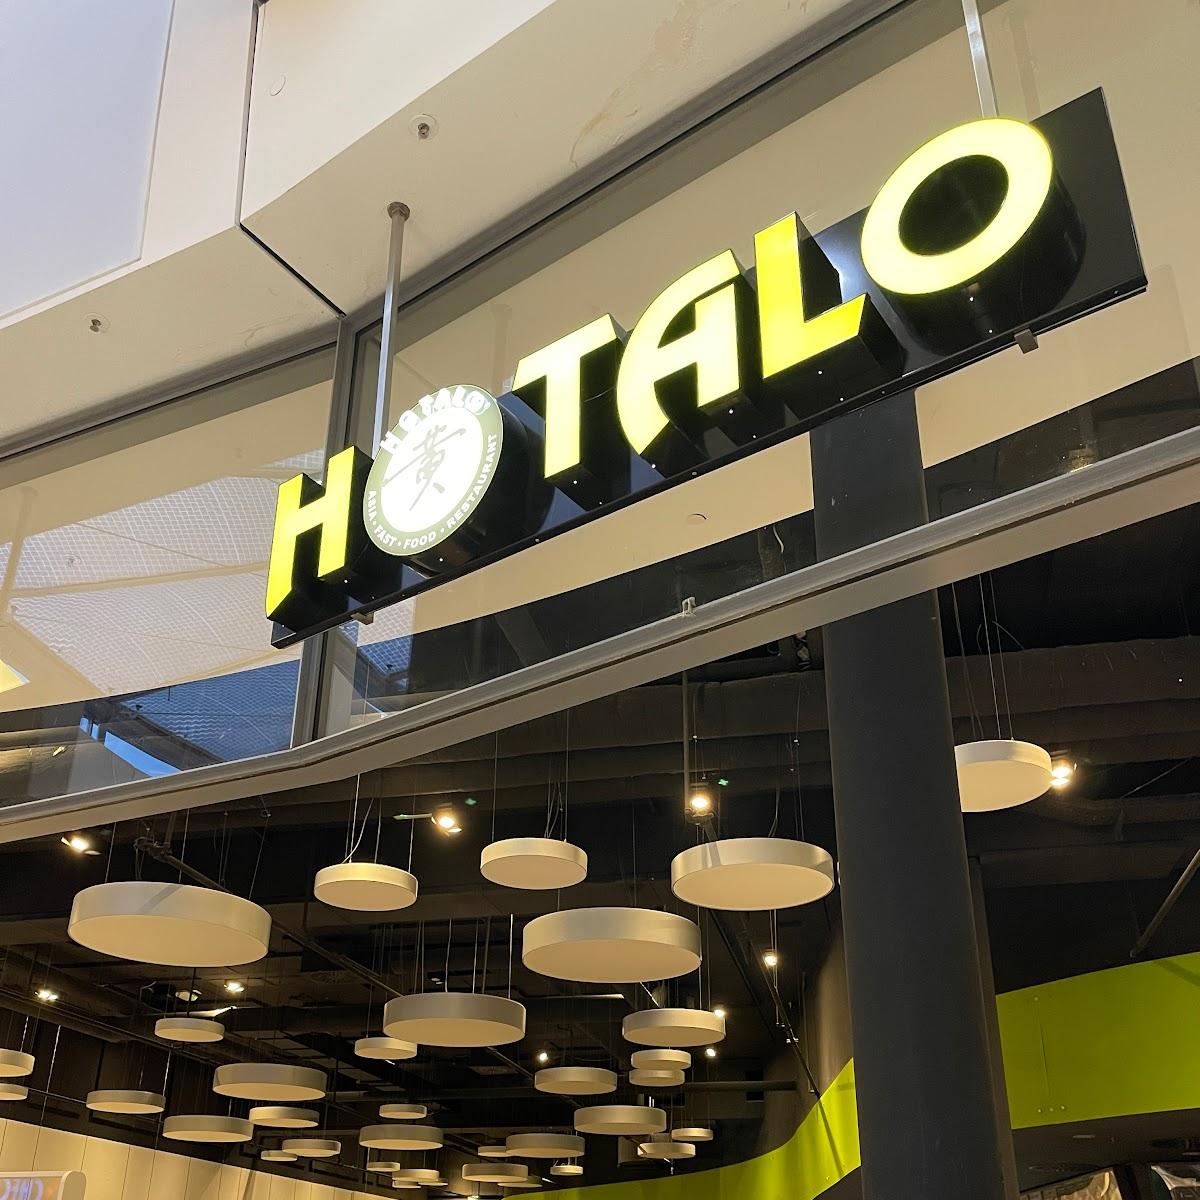 Restaurant "Hotalo Asia Fast Food Restaurant" in Baden-Baden